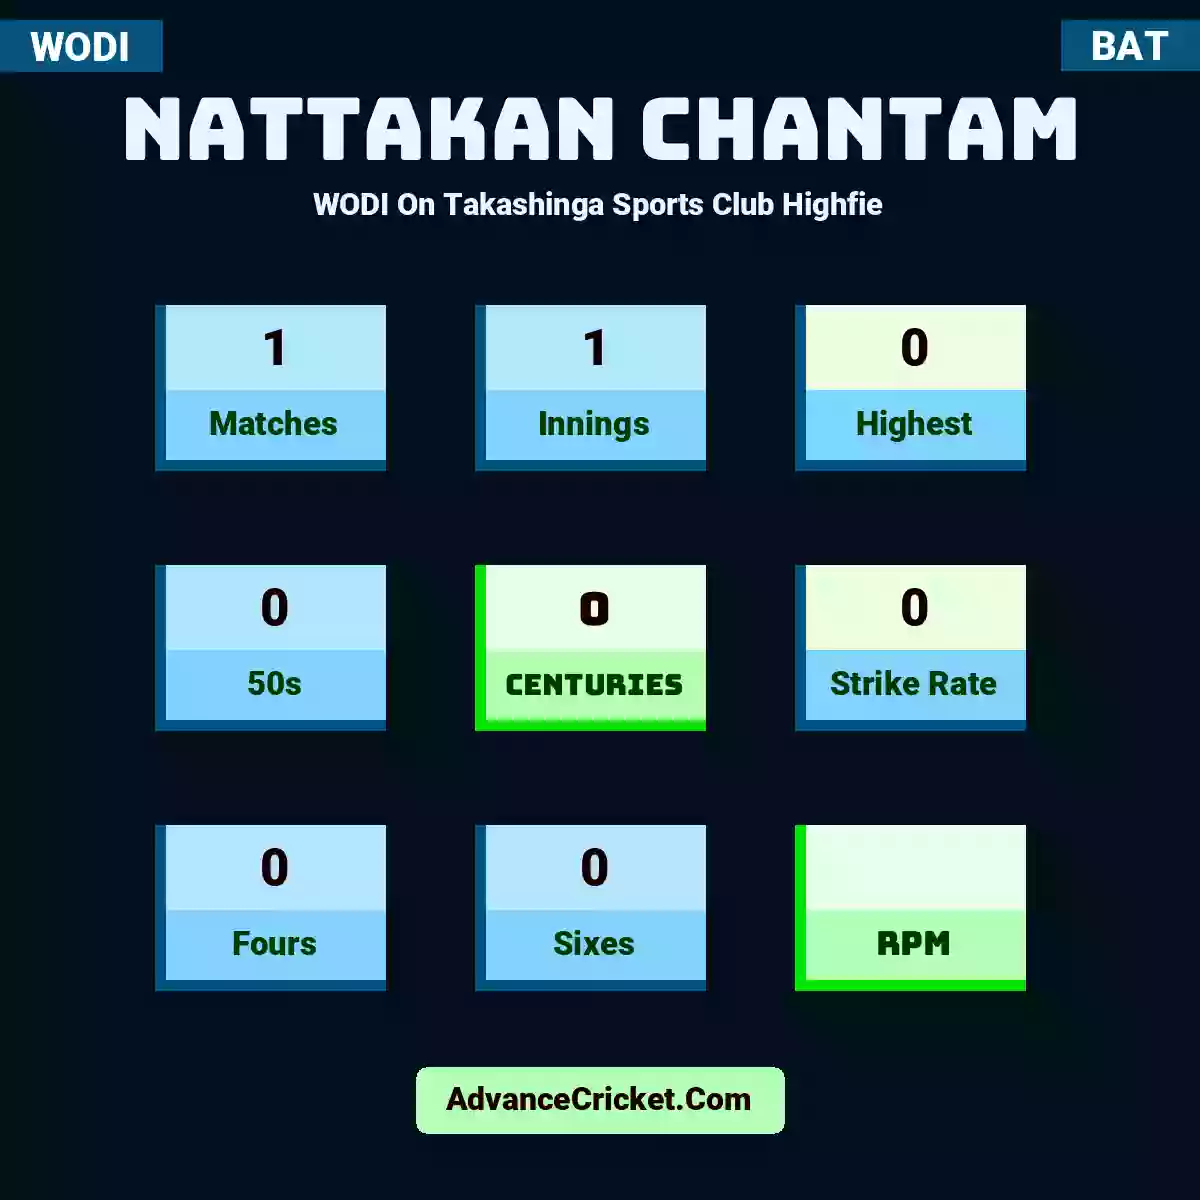 Nattakan Chantam WODI  On Takashinga Sports Club Highfie, Nattakan Chantam played 1 matches, scored 0 runs as highest, 0 half-centuries, and 0 centuries, with a strike rate of 0. N.Chantam hit 0 fours and 0 sixes.